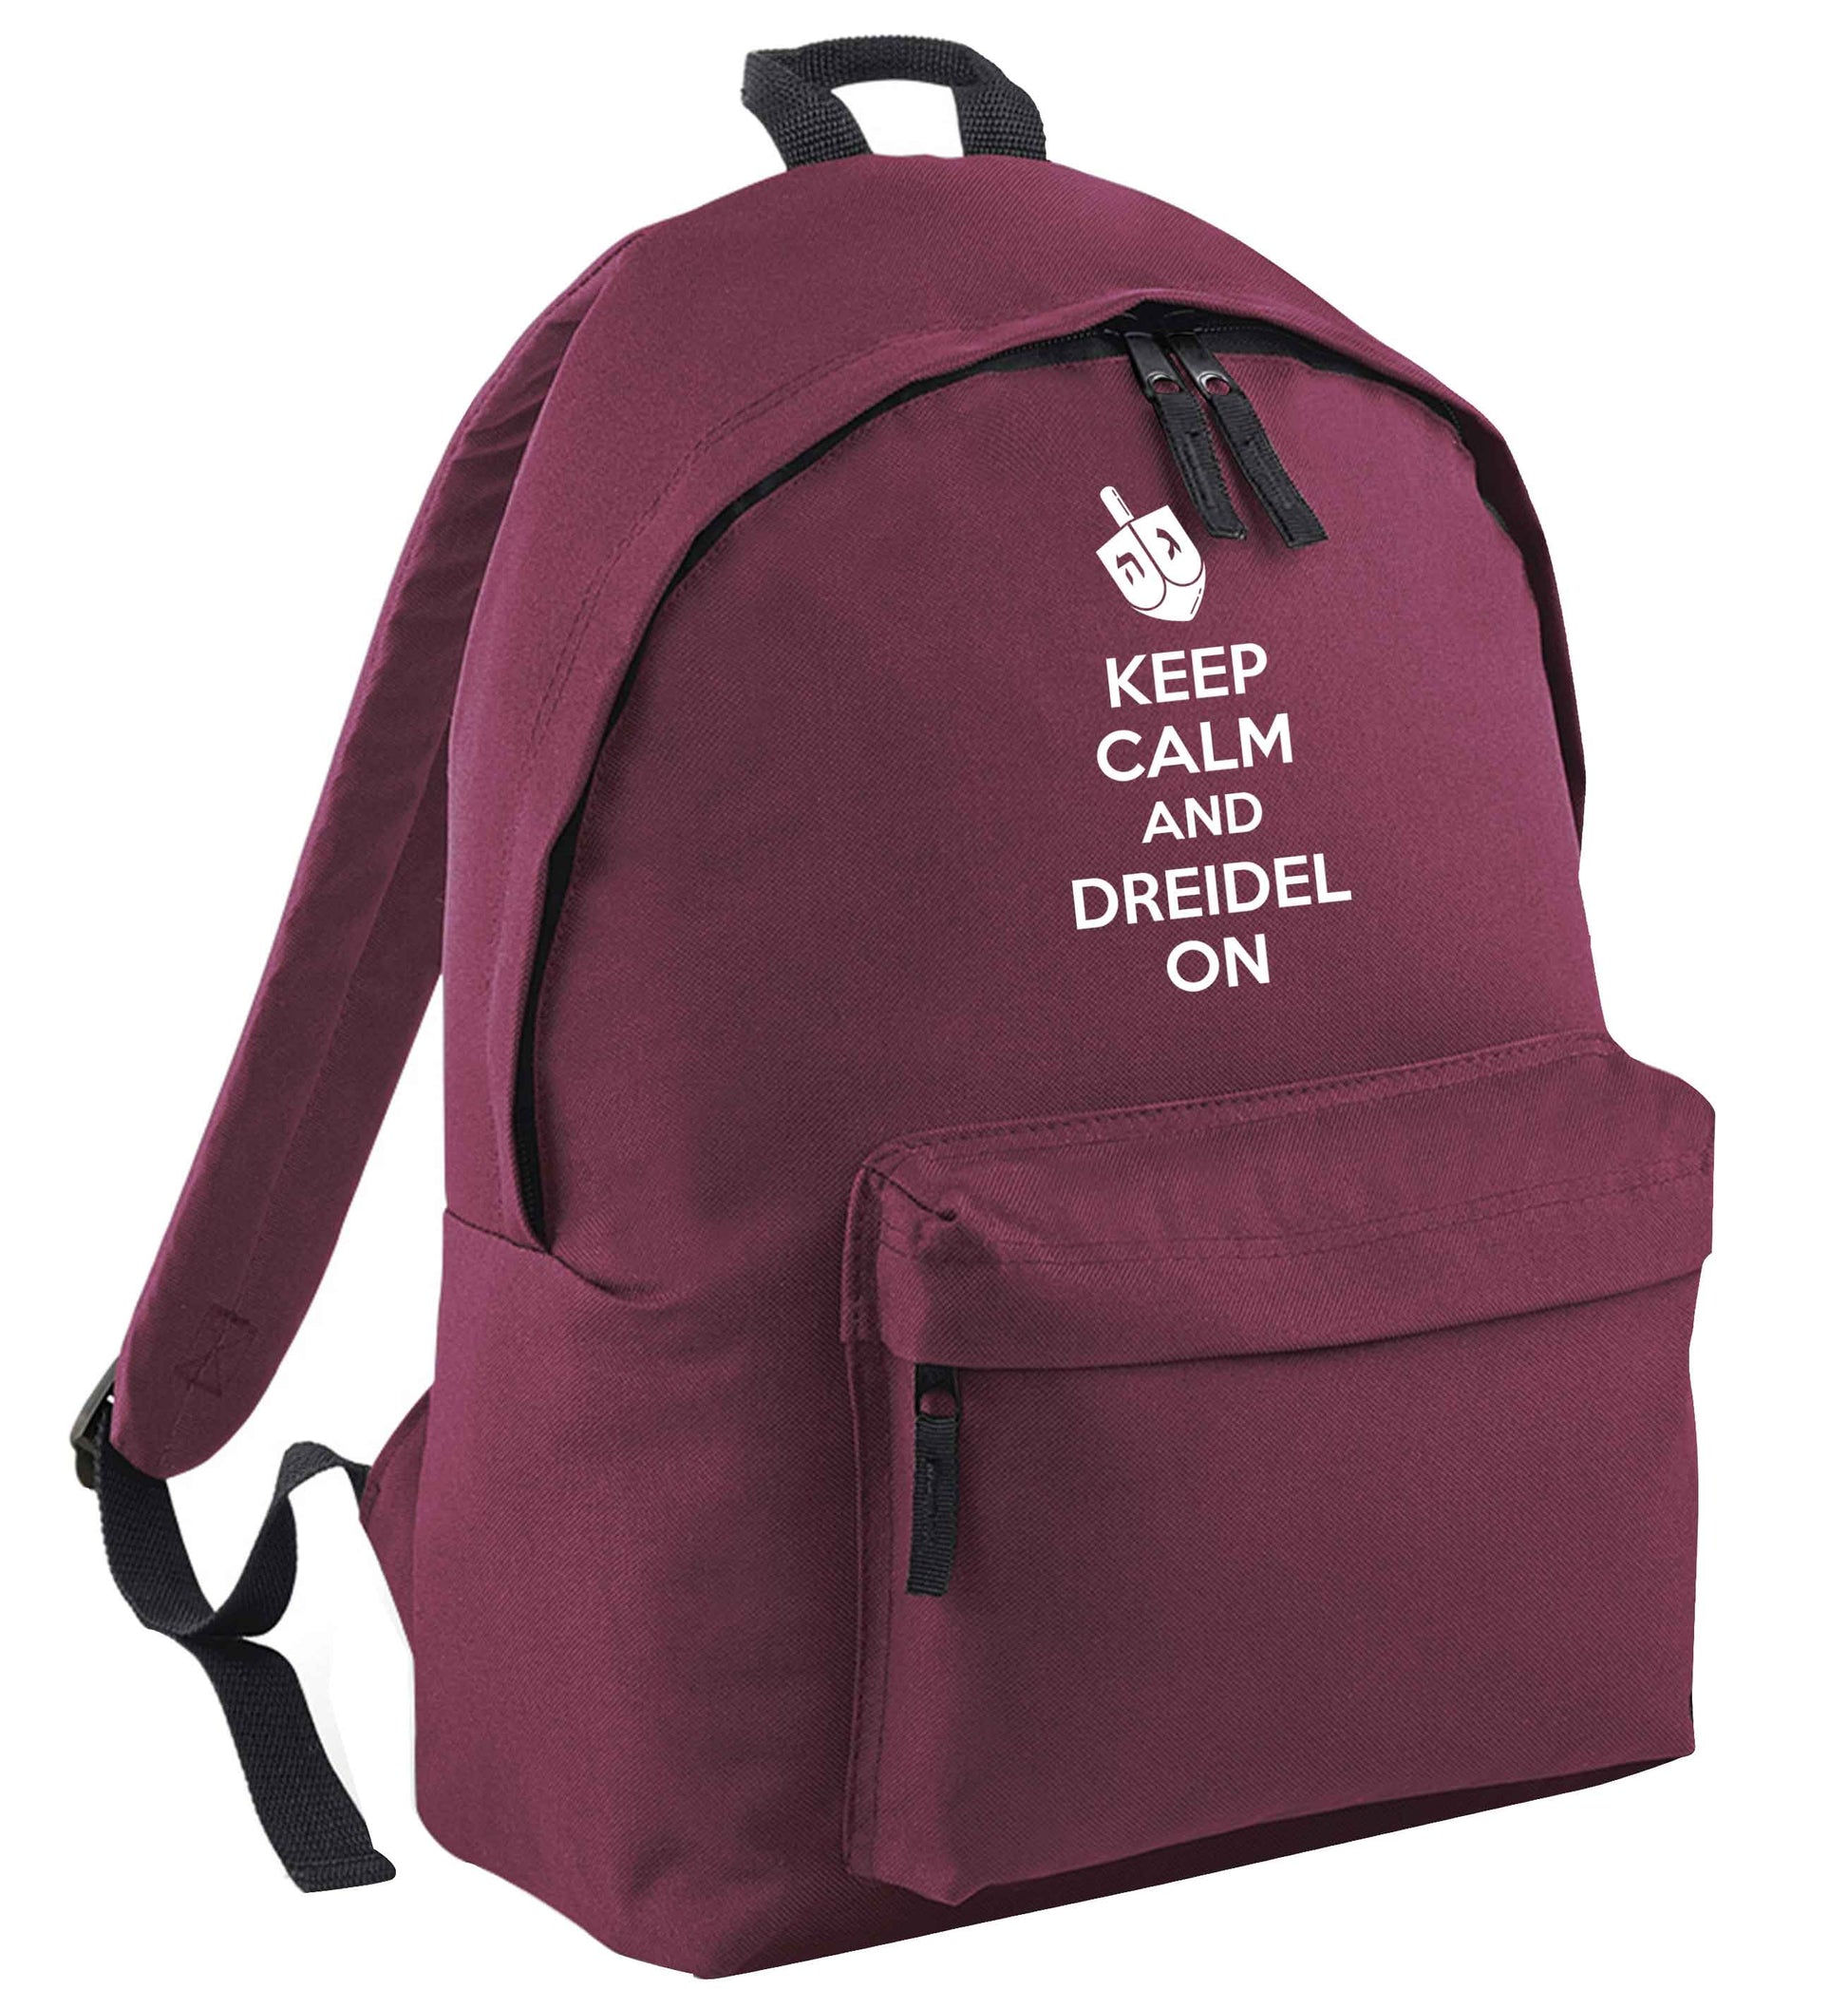 Keep calm and dreidel on maroon adults backpack